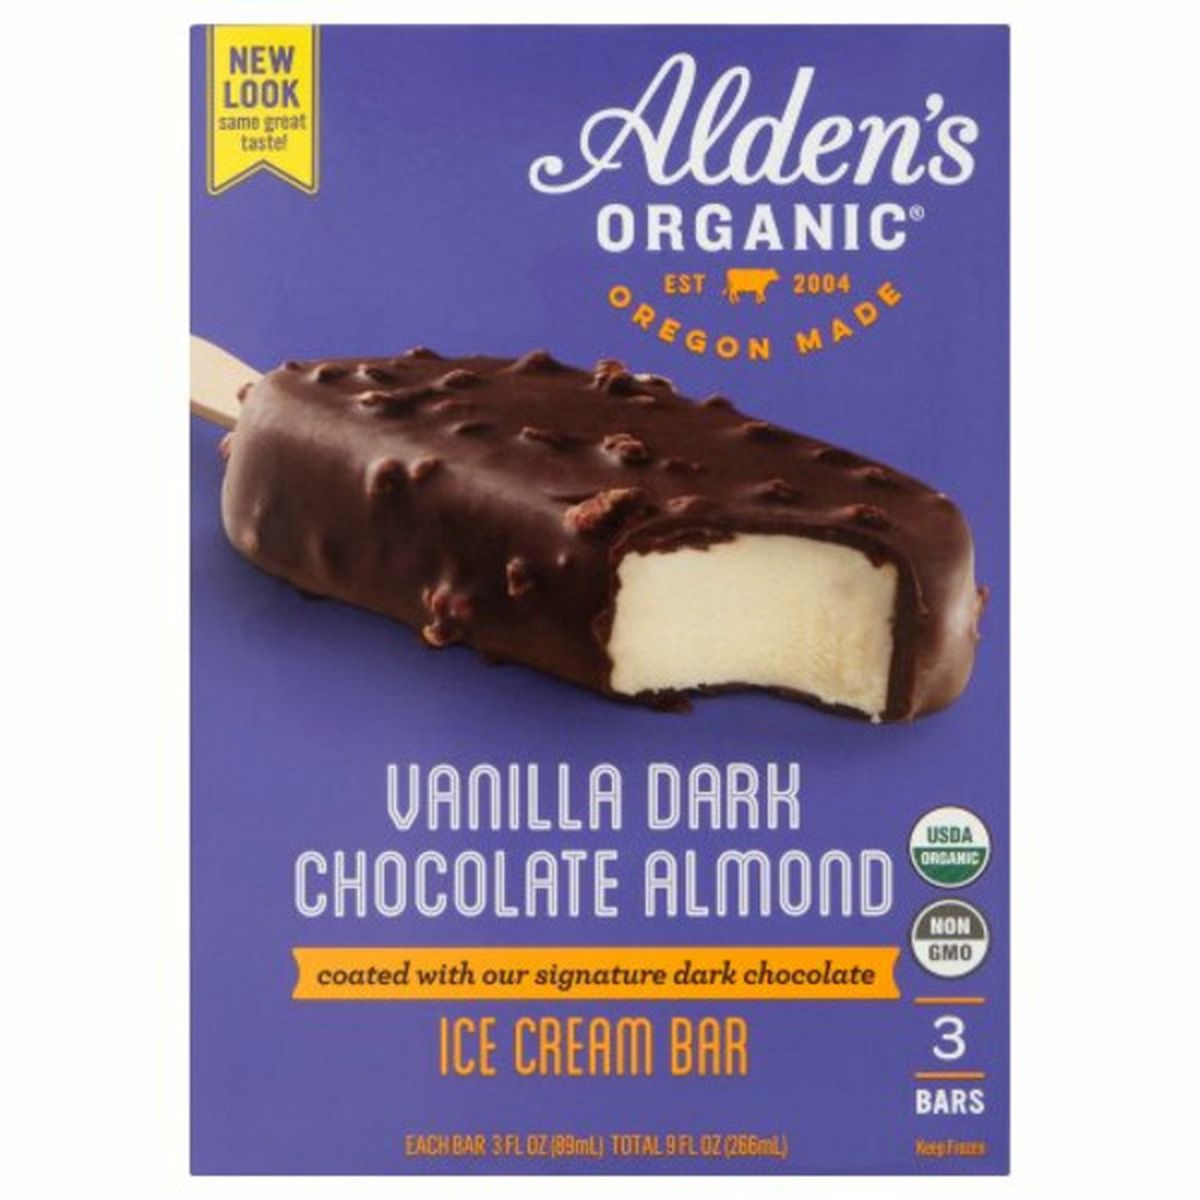 Calories in Alden's Organic Ice Cream Bar, Vanilla Dark Chocolate Almond